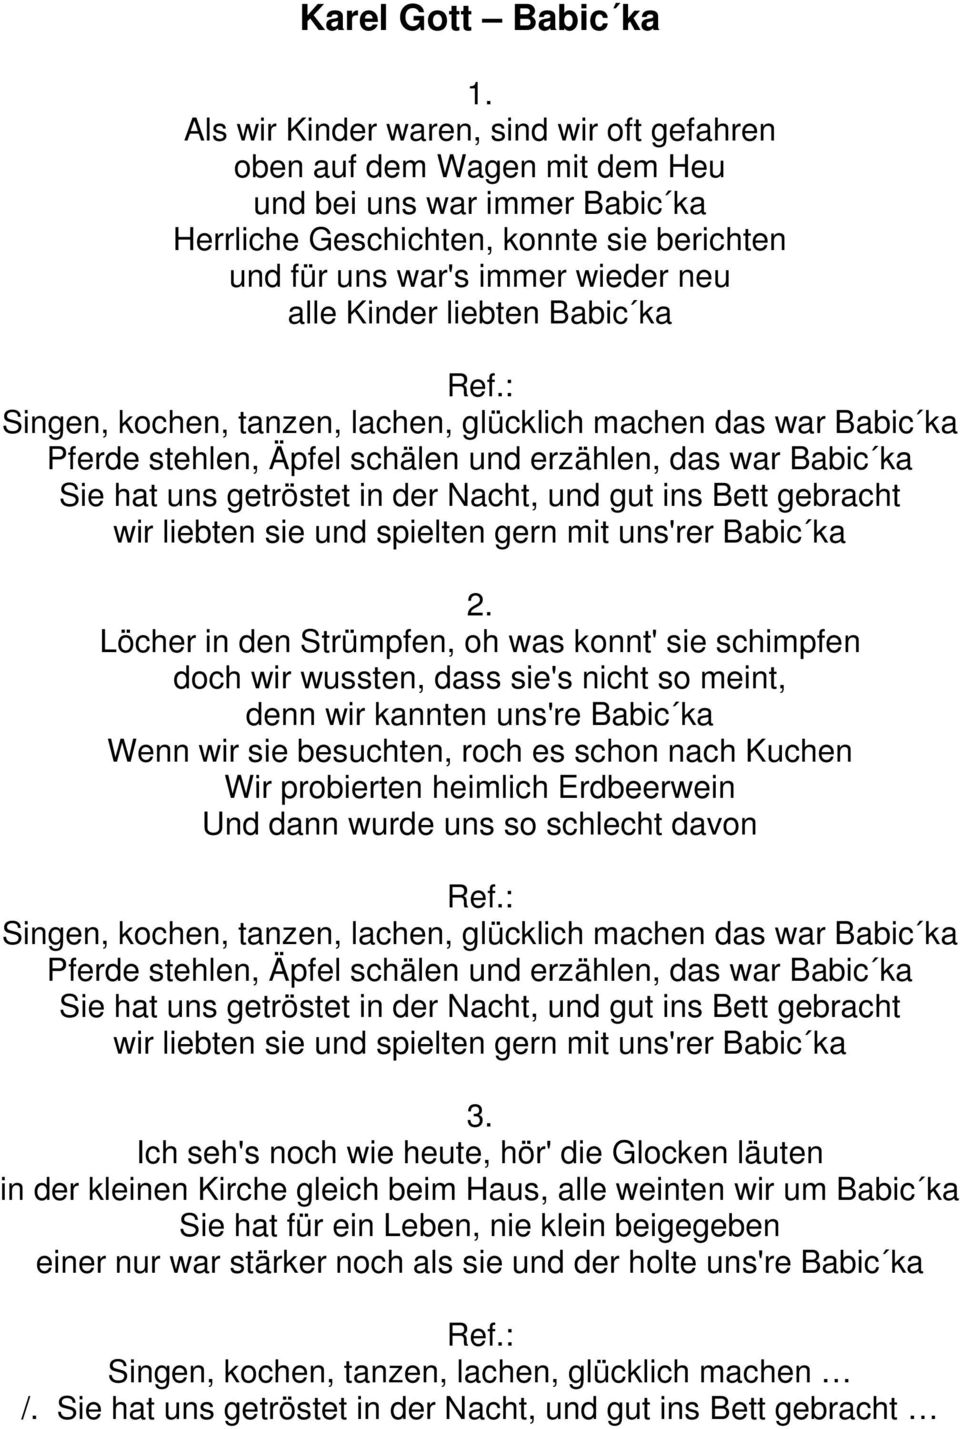 Imani Coppola Legend Of A Cowgirl Songtext Deutsche Ubersetzung Lyrics Swr3